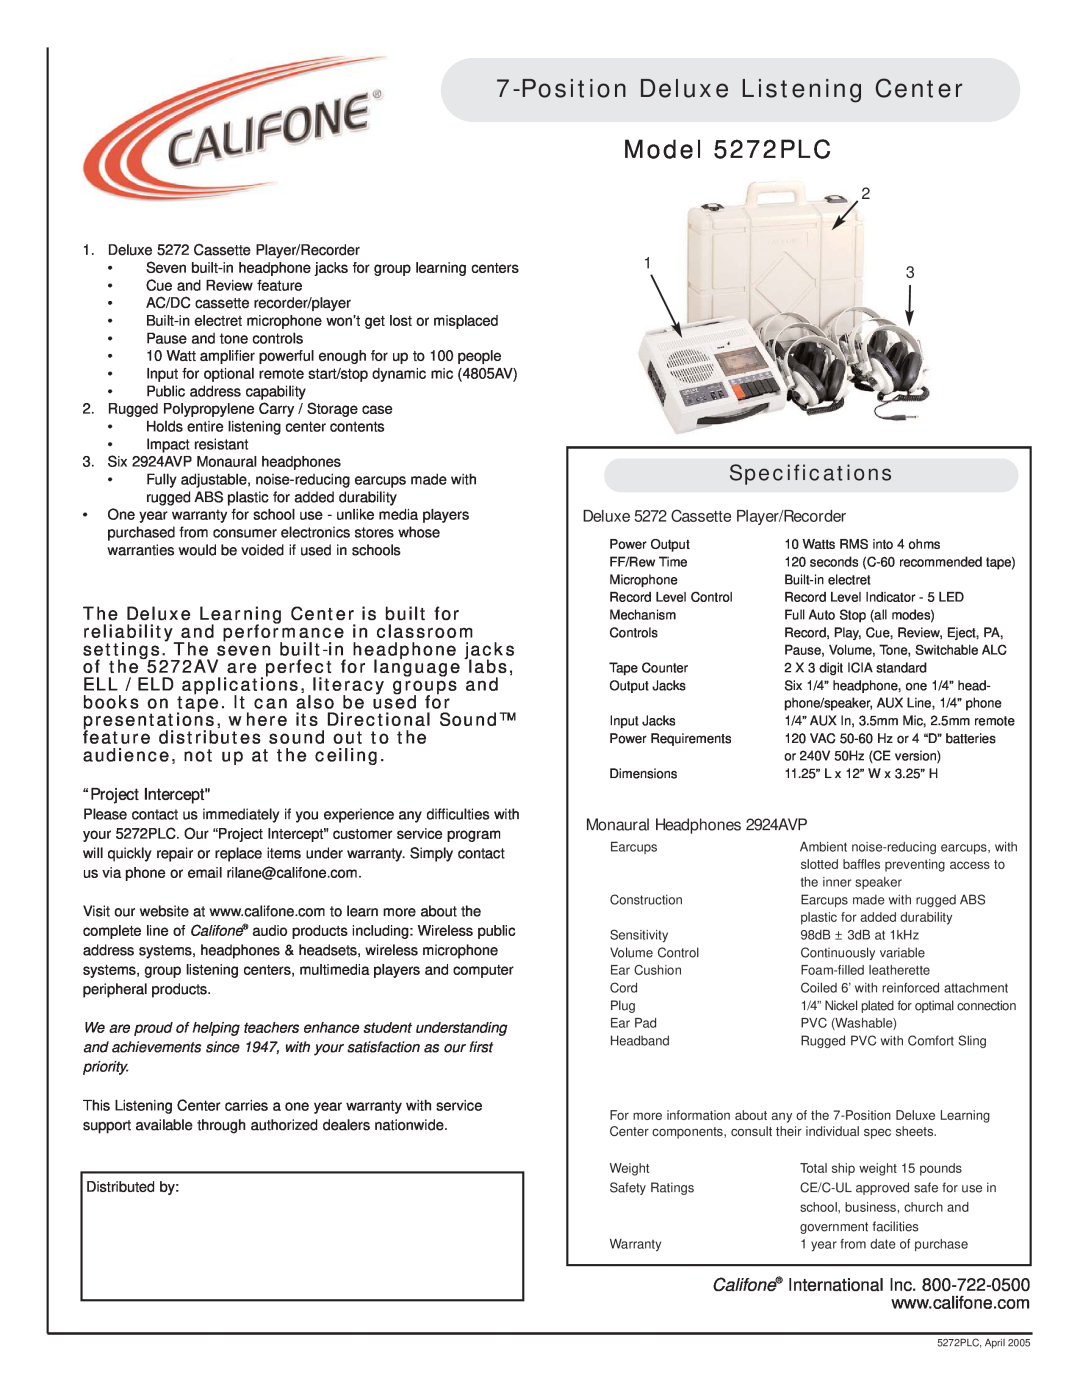 Califone specifications PositionDeluxe Listening Center Model 5272PLC, Specifications, Califone International Inc 